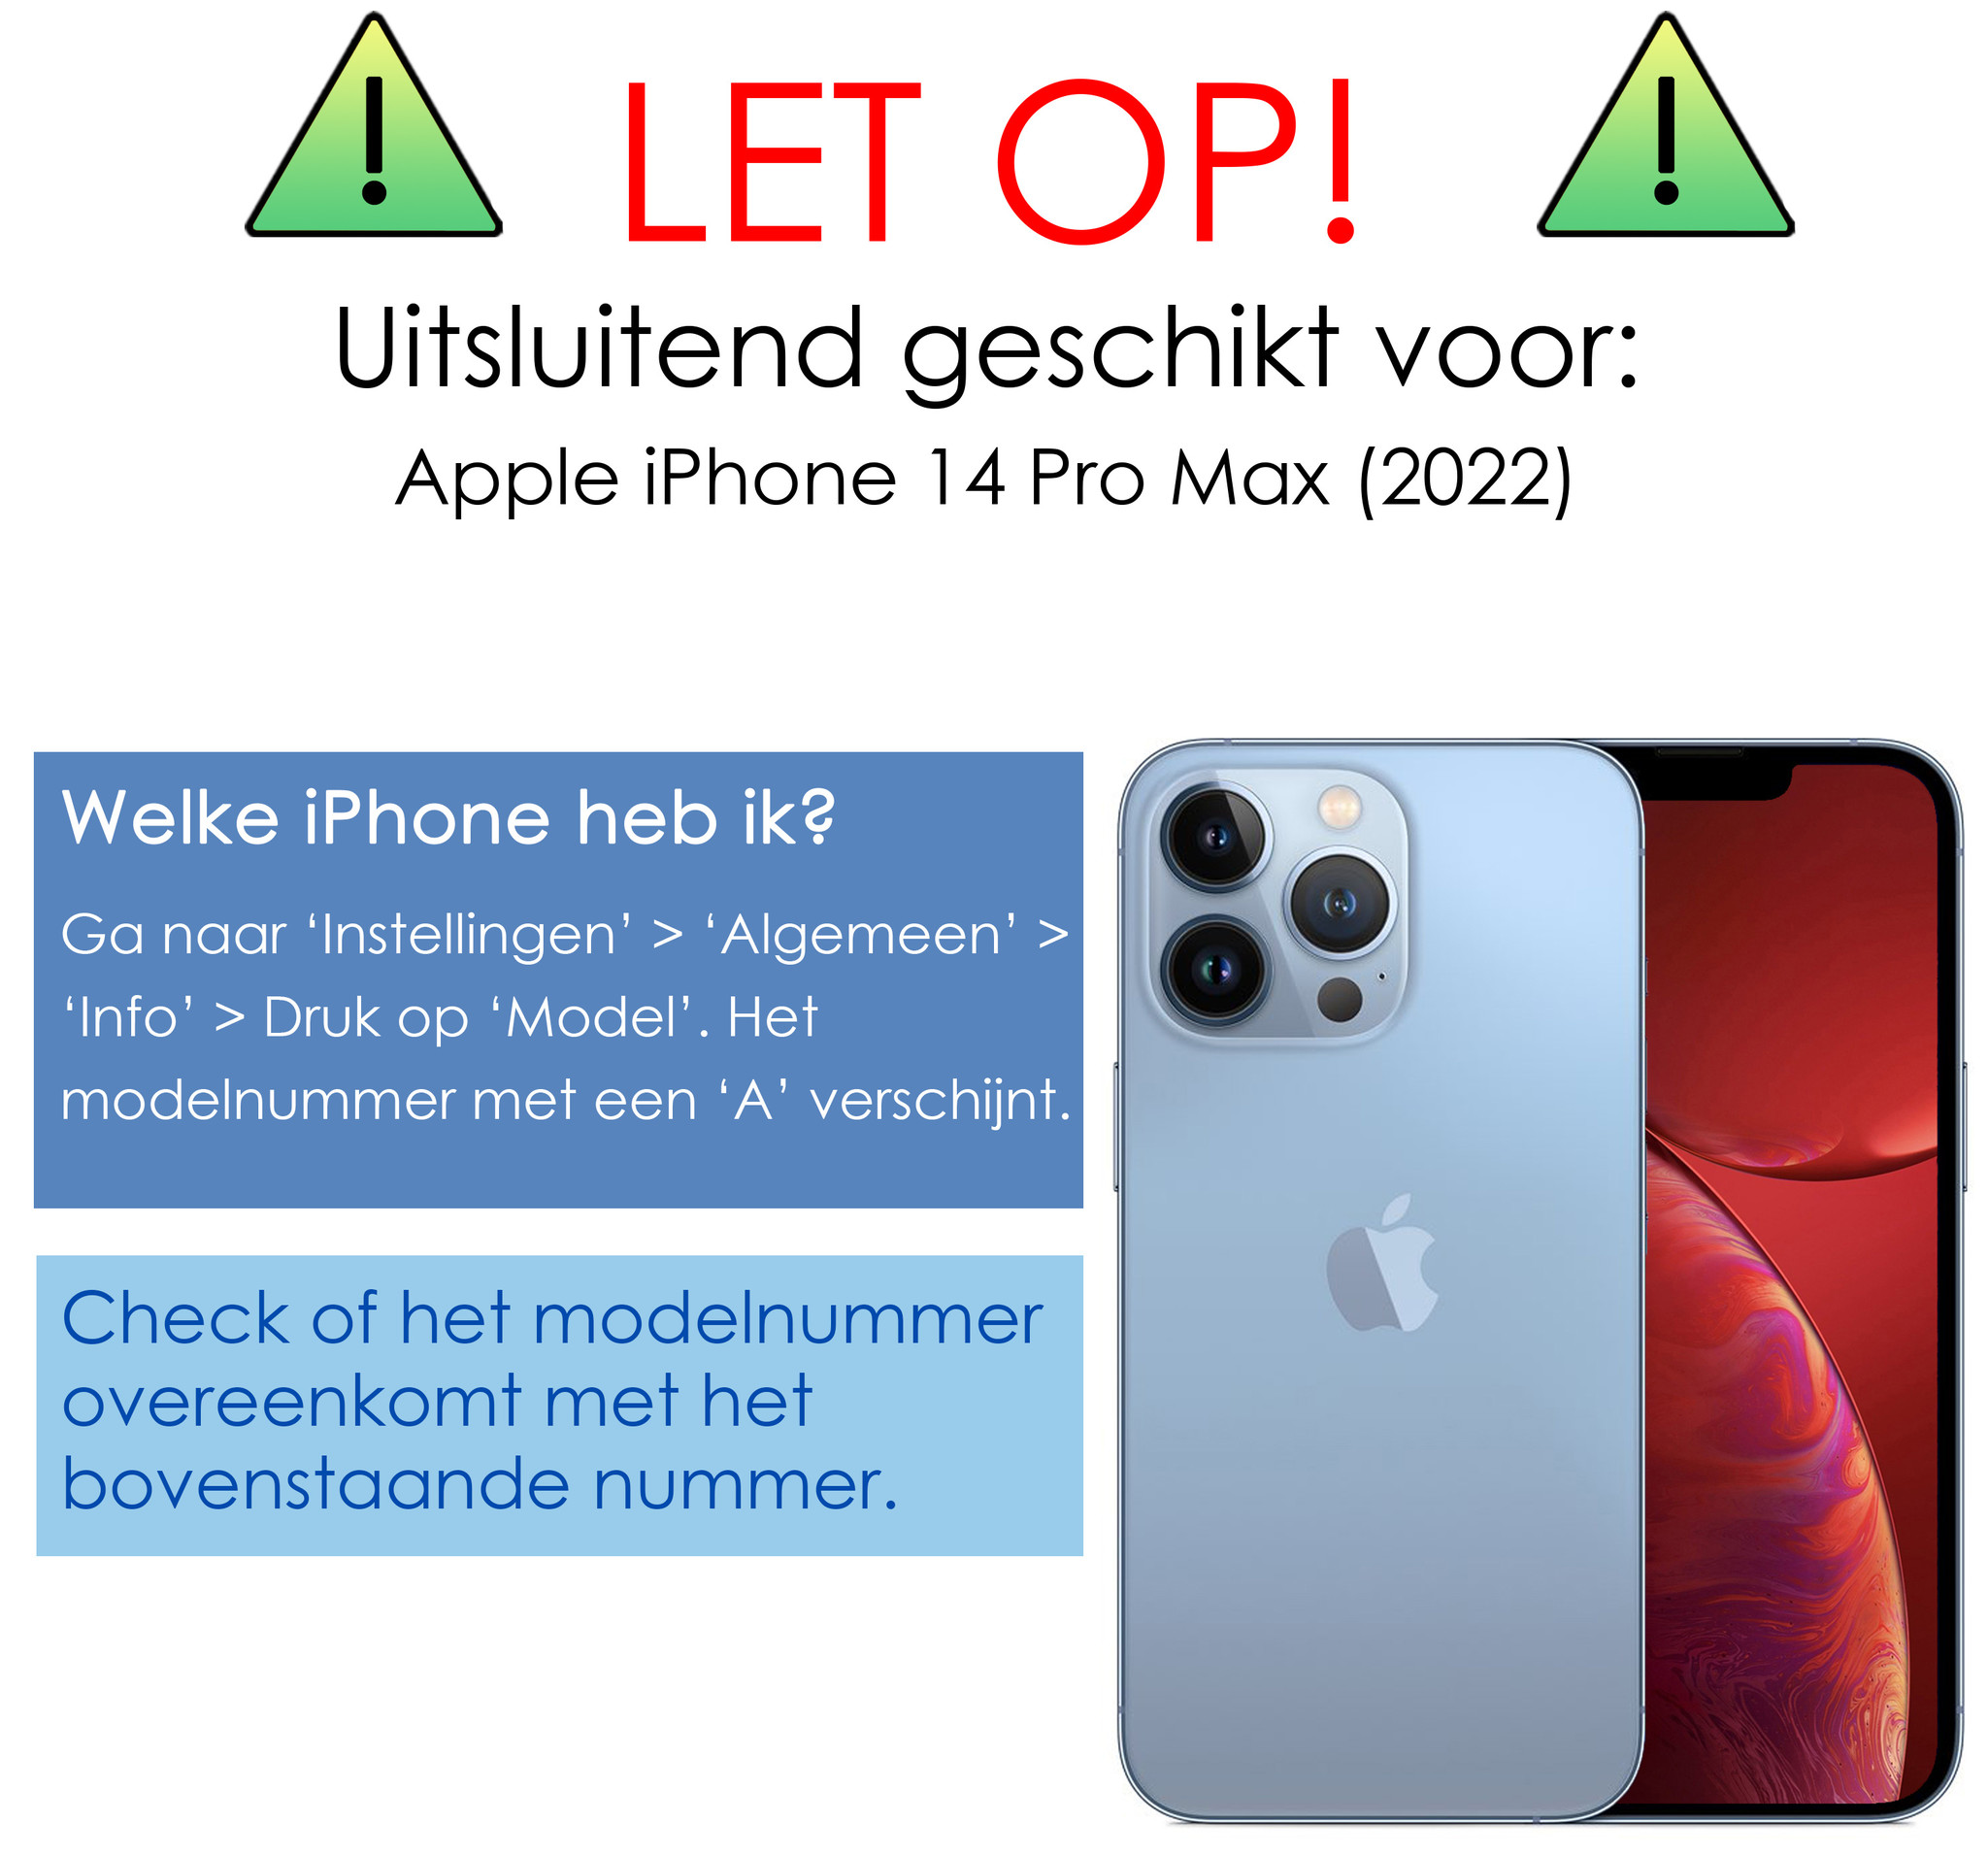 Hoes Geschikt voor iPhone 14 Pro Max Hoesje Cover Siliconen Back Case Hoes - Donkerblauw